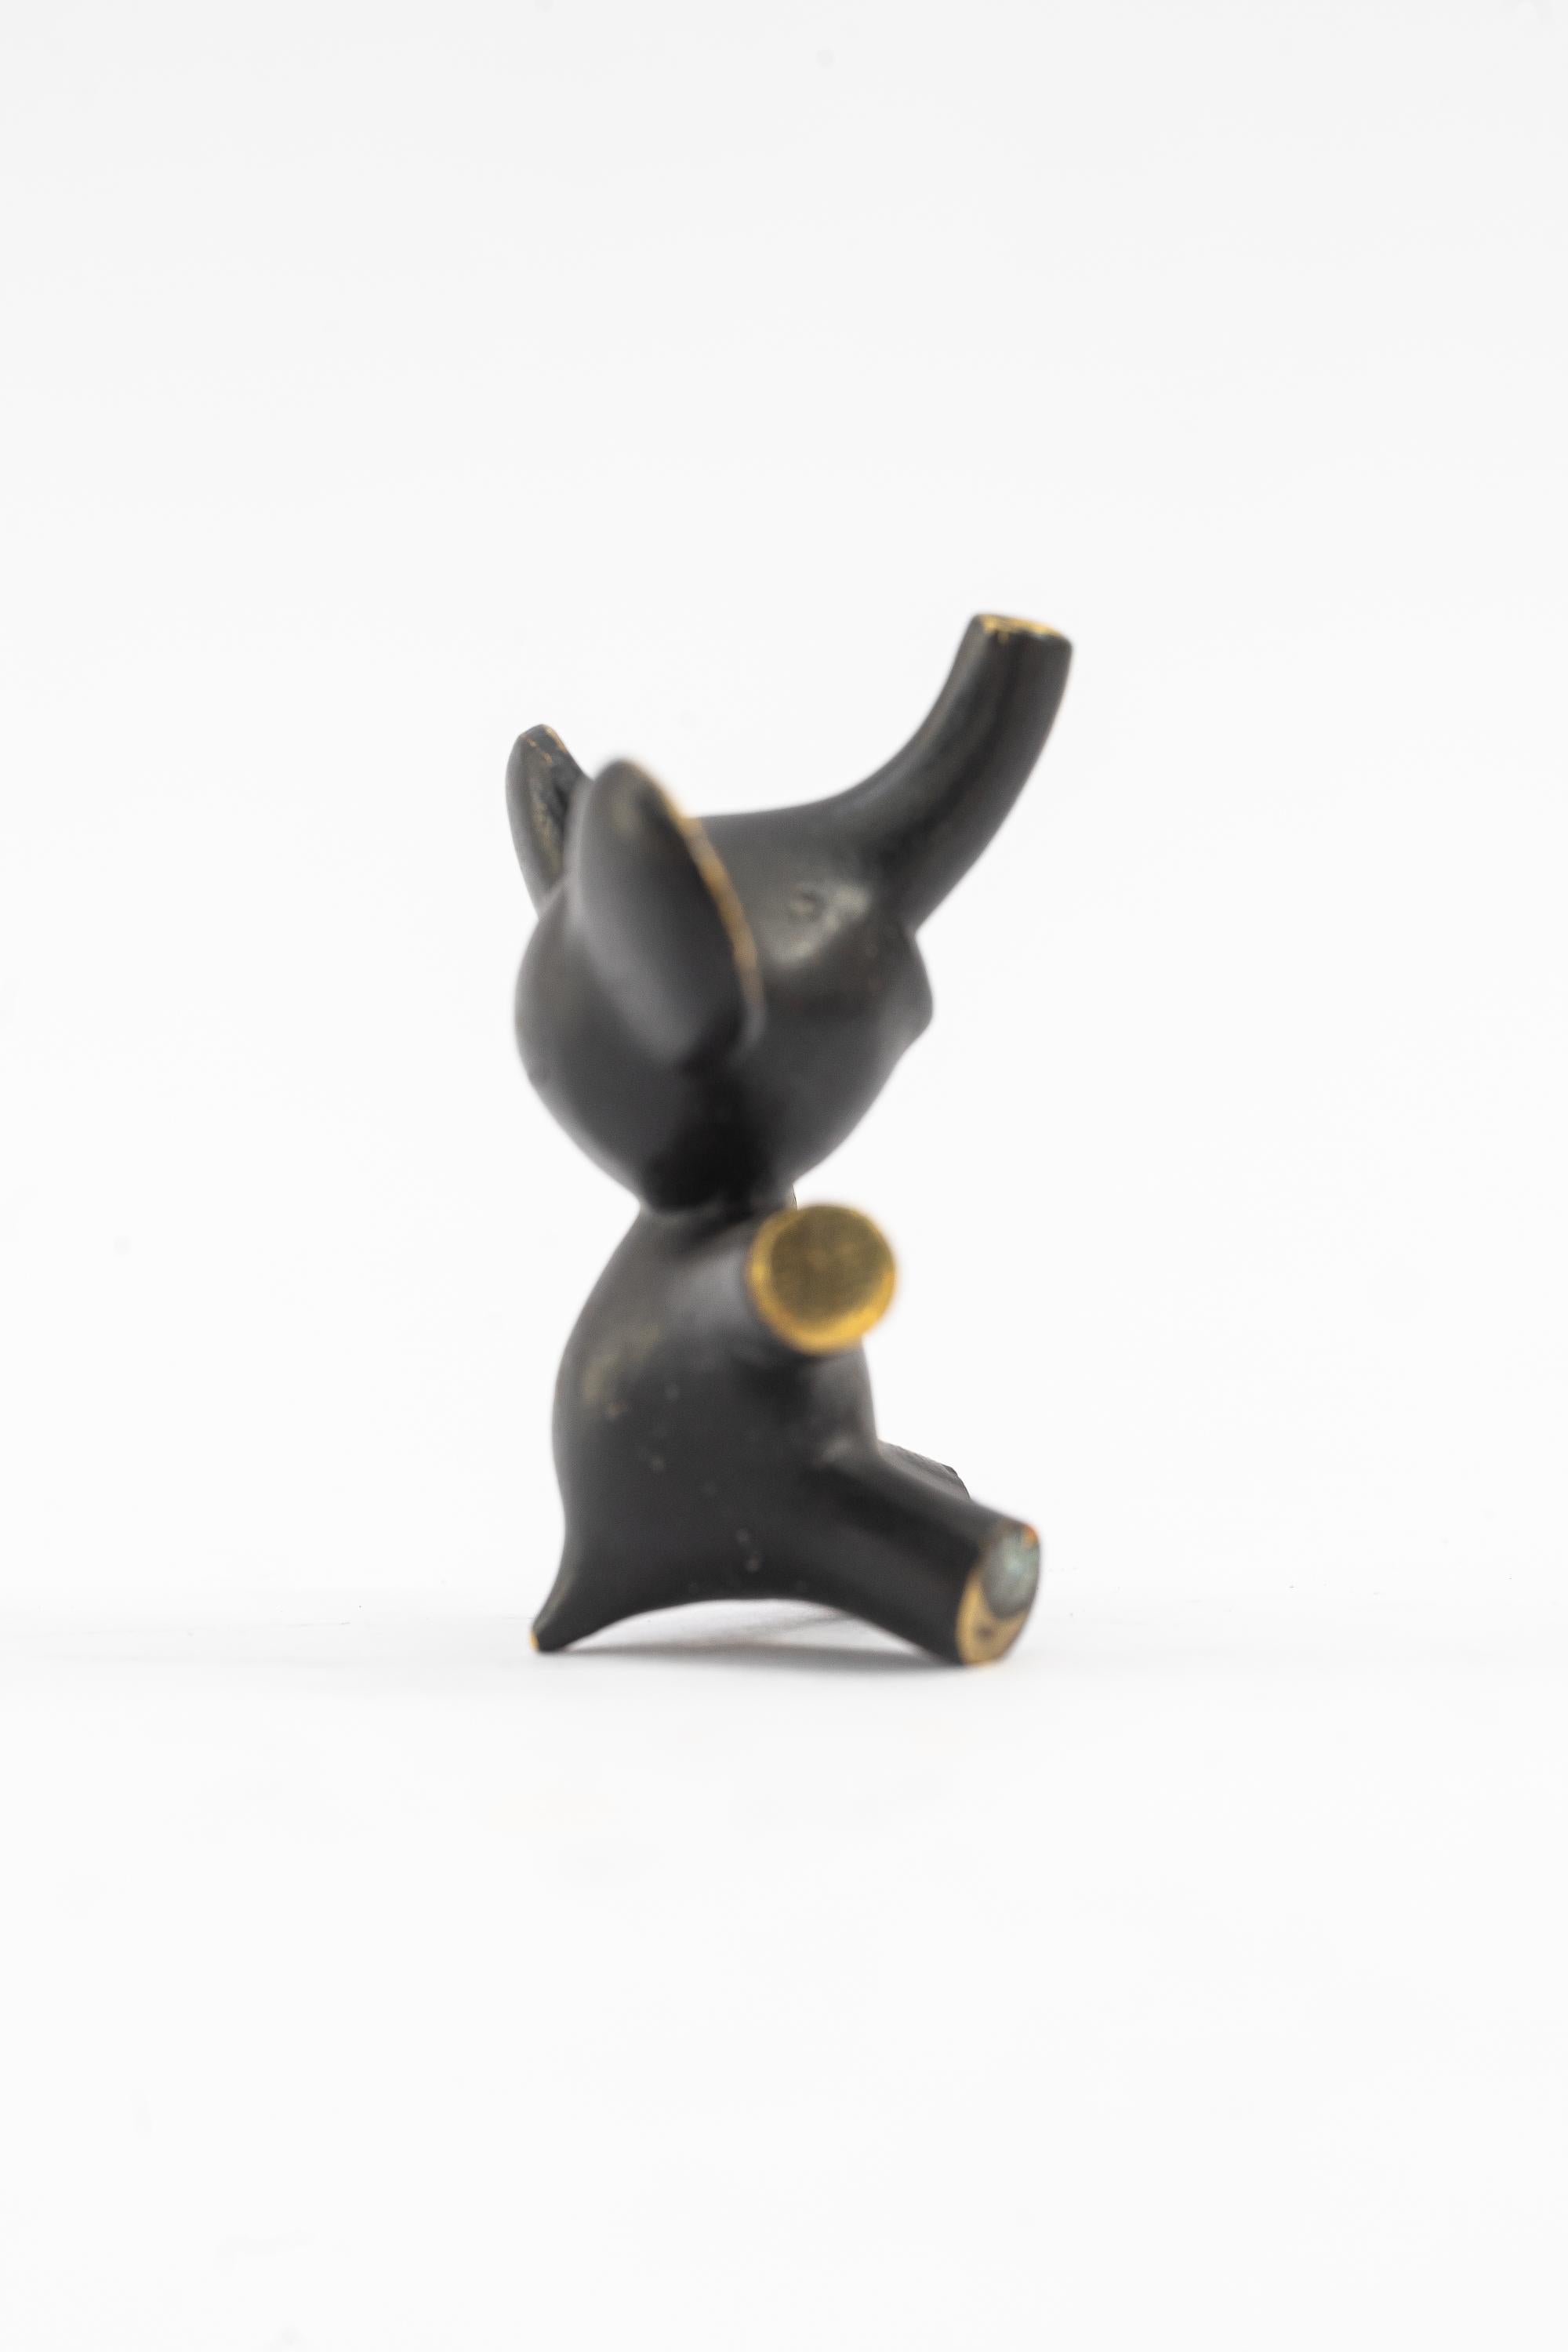 Mid-Century Modern Small Elephant Figurine by Walter Bosse Vienna Around 1950s For Sale